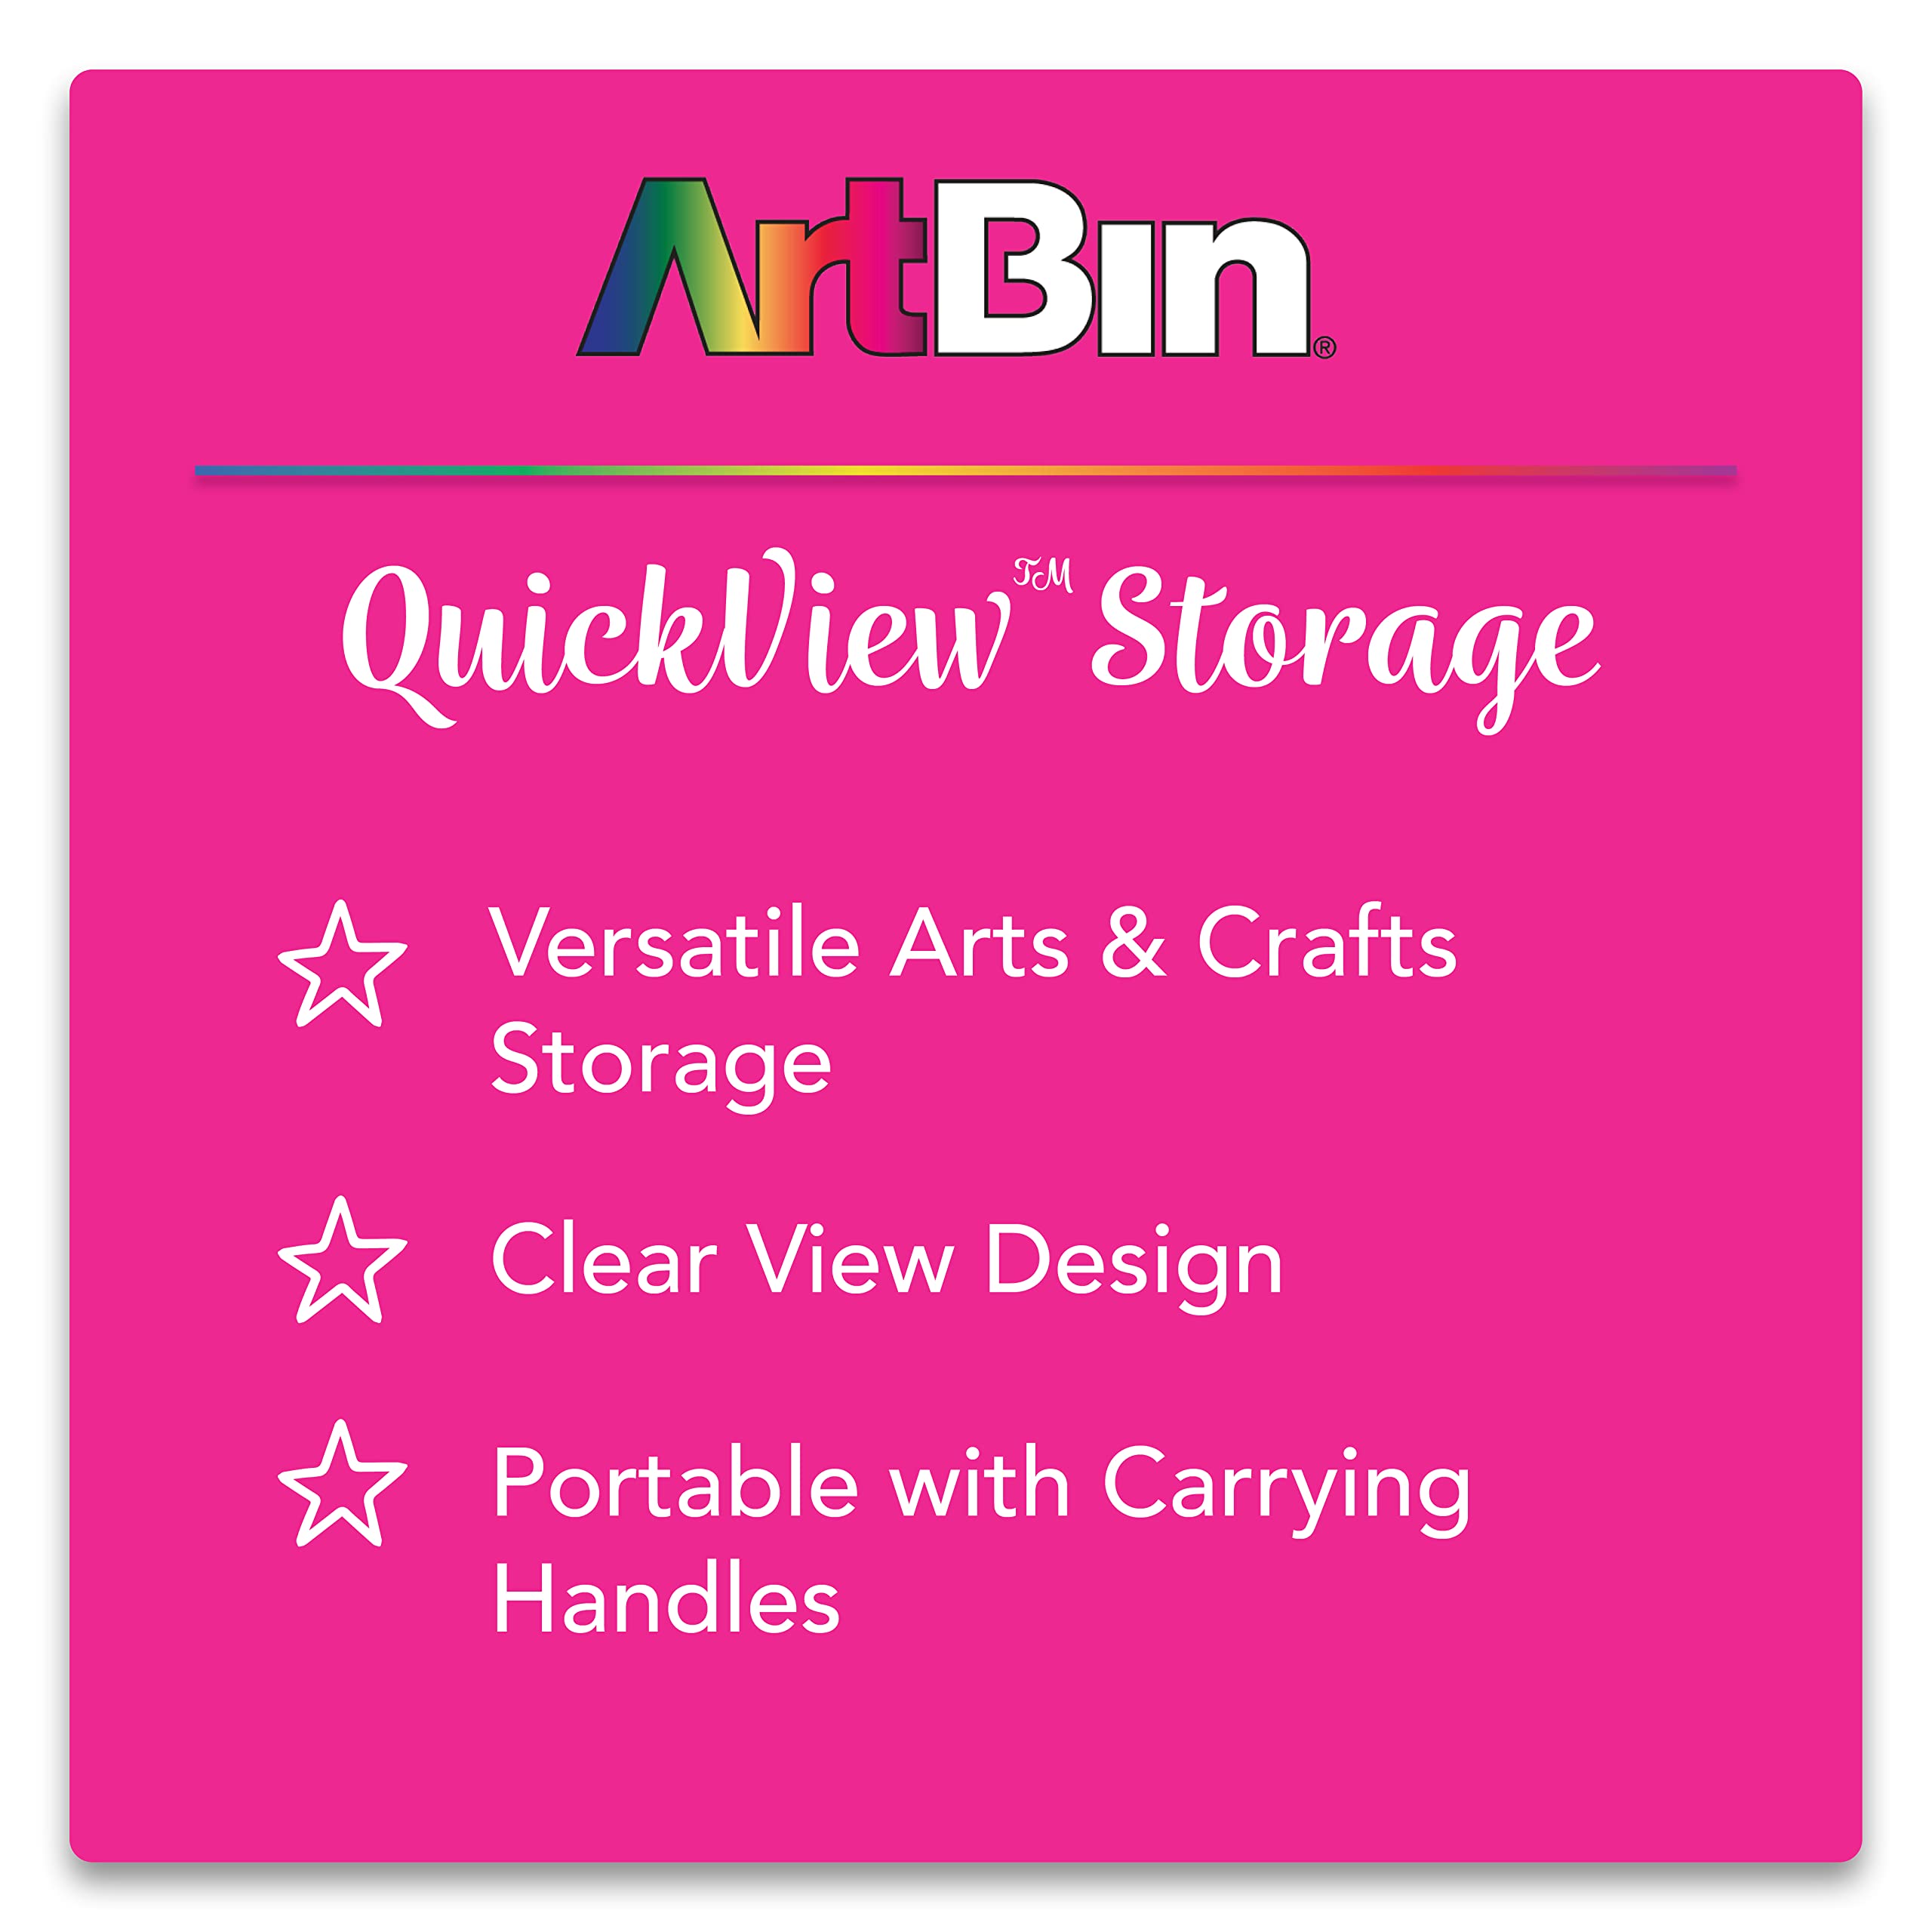 ArtBin 6960AB Quick View Deep Base Carrying Case, Portable Art & Craft Storage Box, 14.5